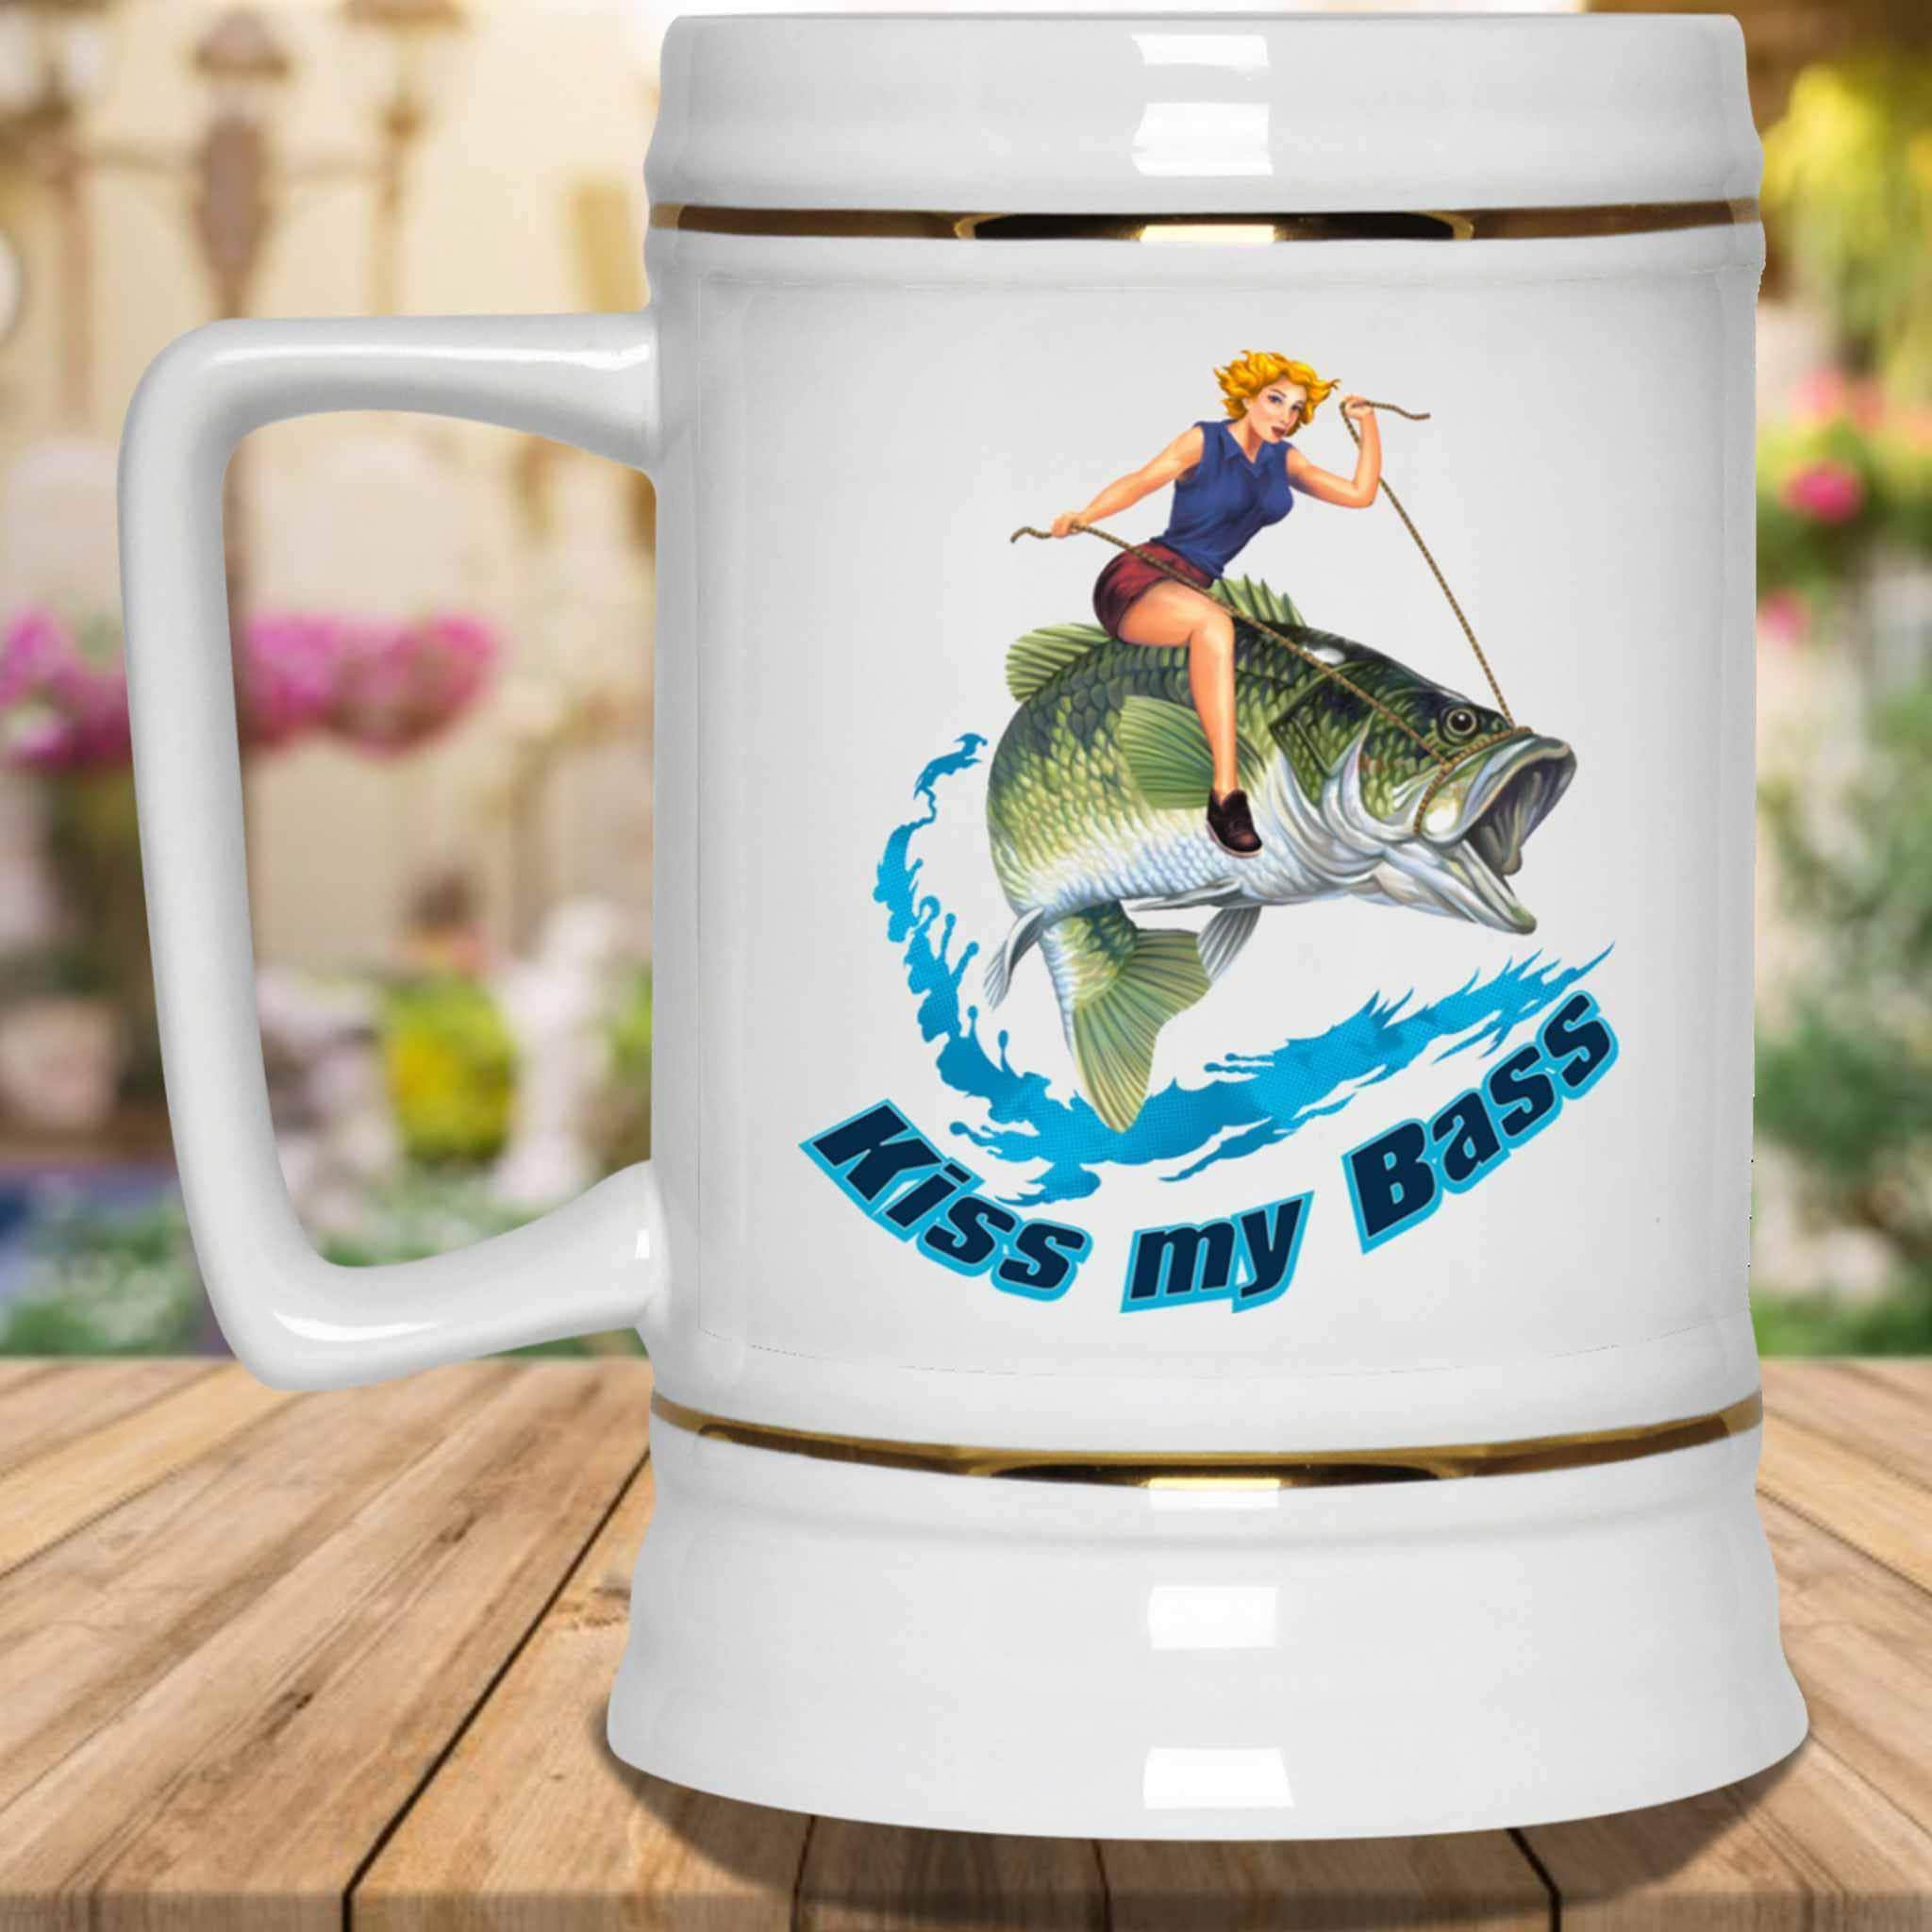 https://cdn.shopify.com/s/files/1/0267/0608/4013/products/kiss-my-bass-blonde-pin-up-girl-riding-a-bass-fish-fishing-themed-white-beer-mug-144328.jpg?v=1644634491&width=2048